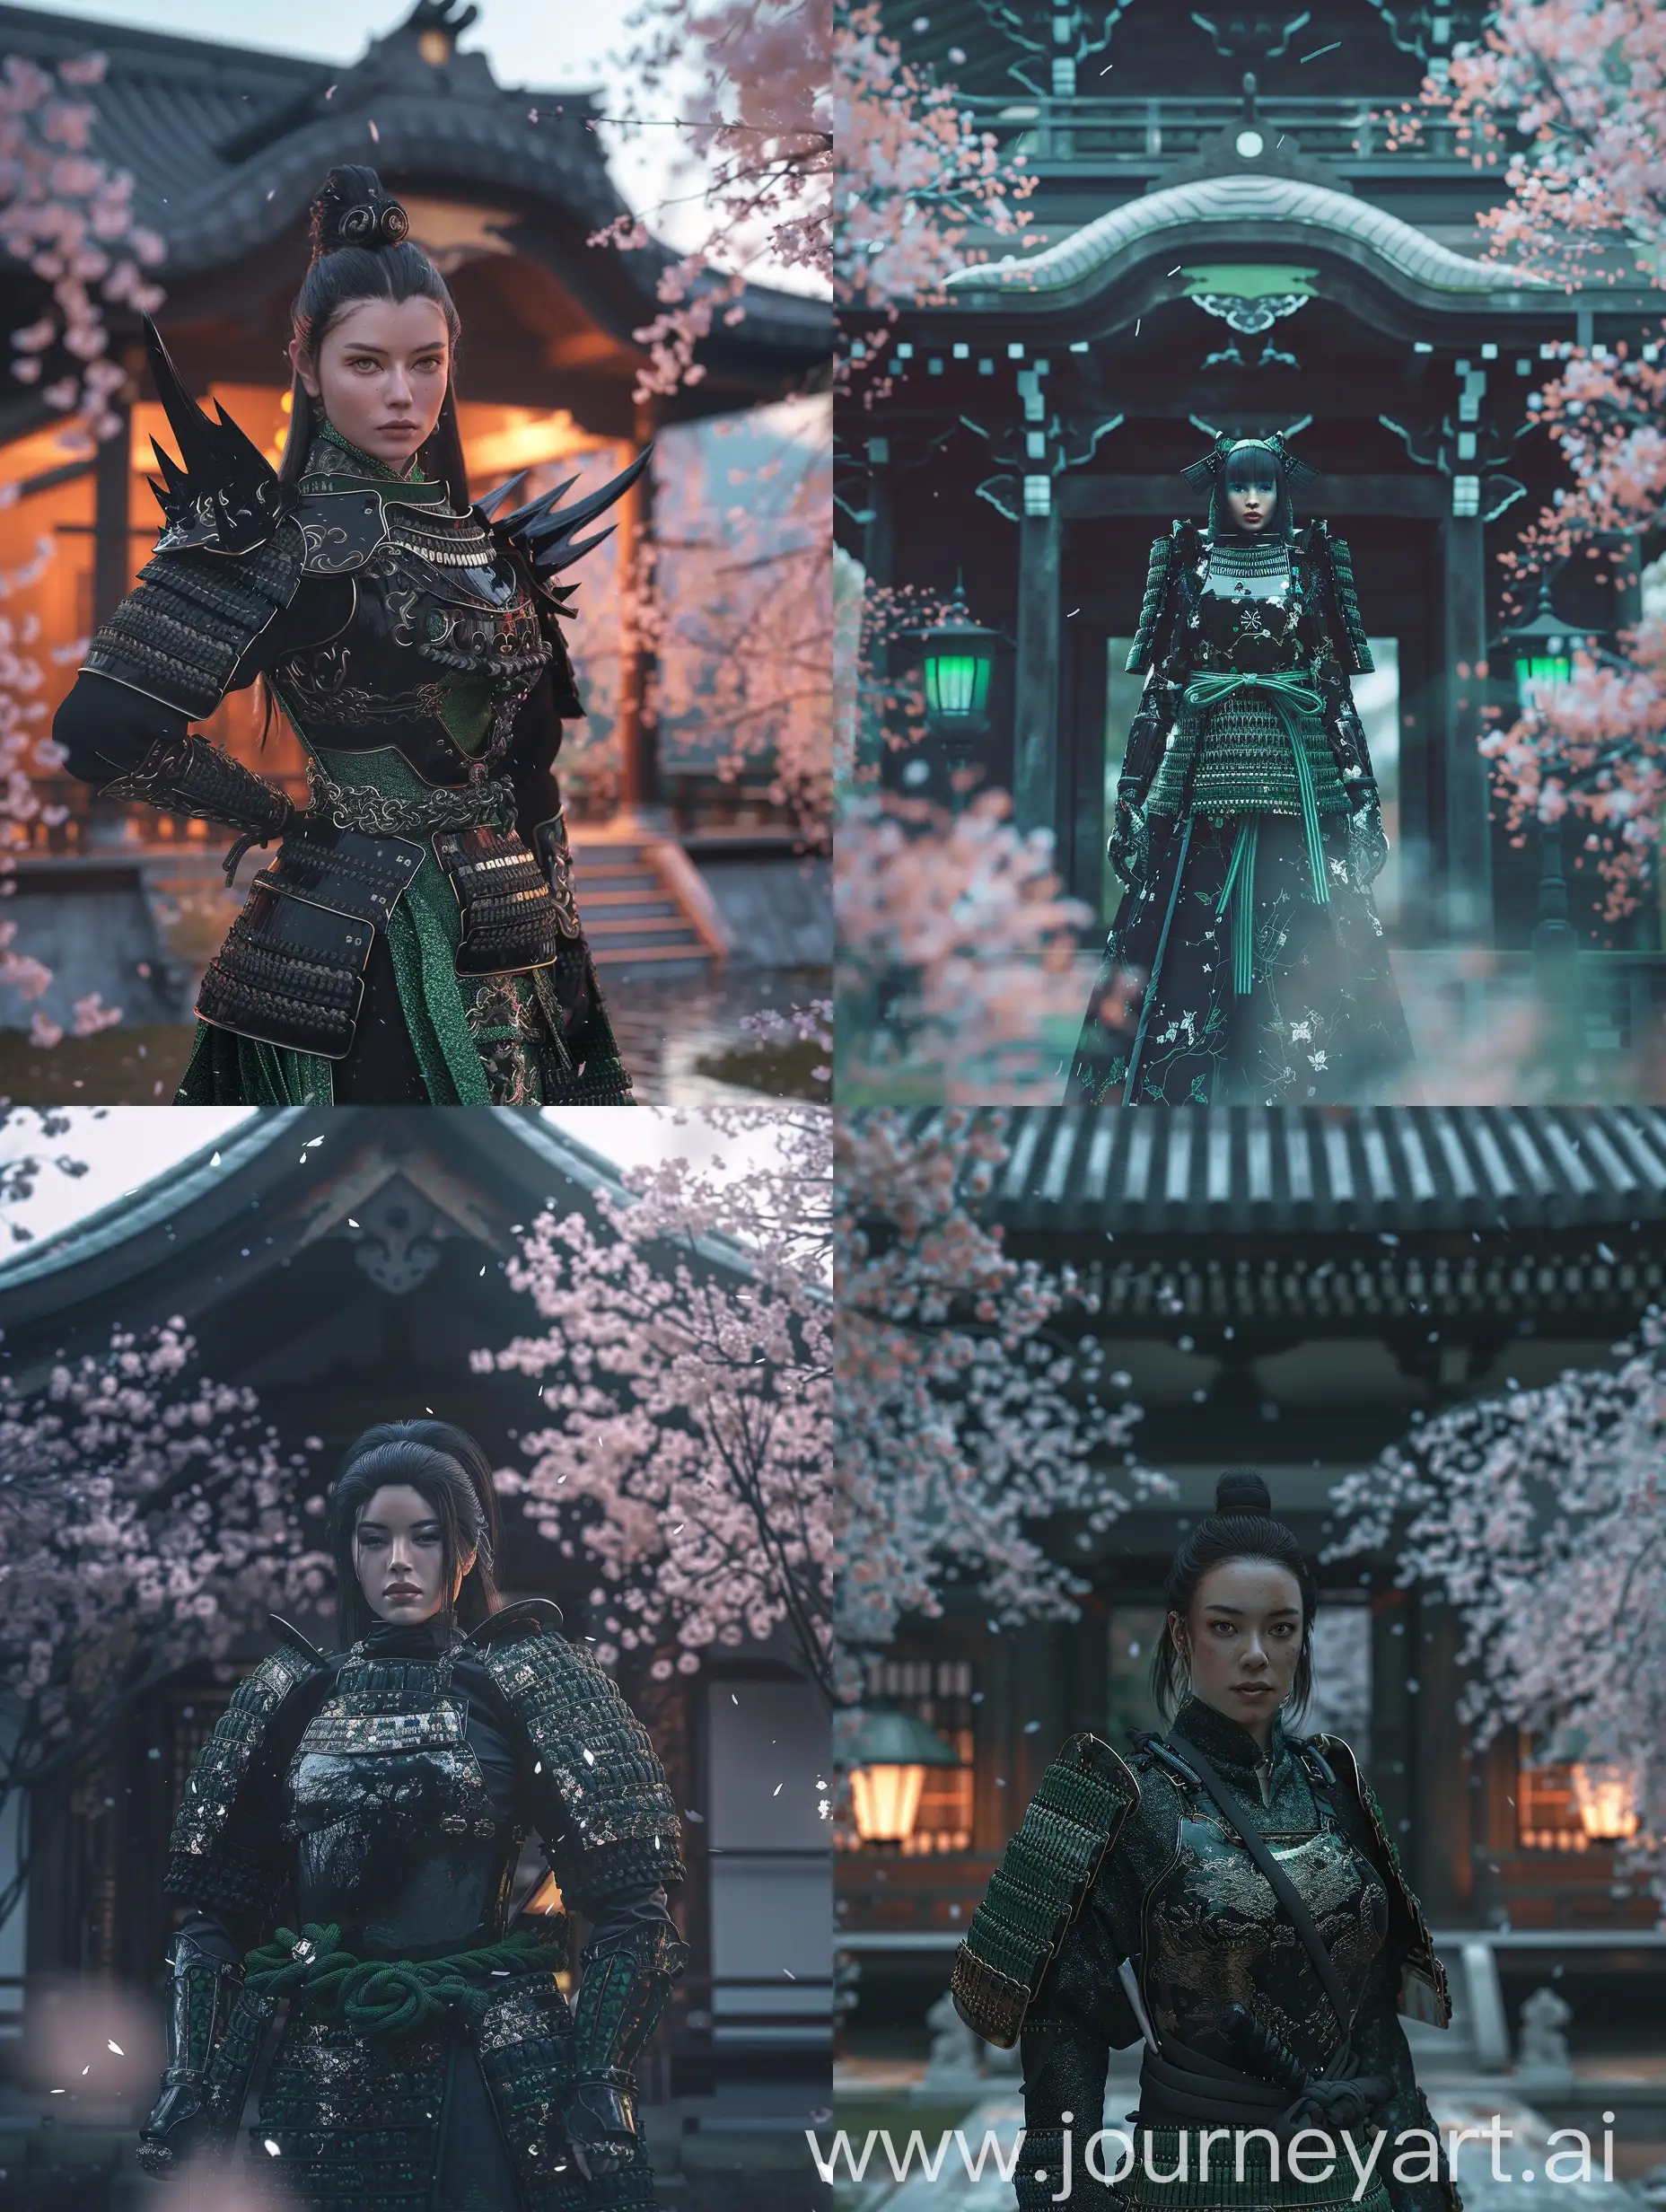 Stunning-Black-and-Green-yoroi-Samurai-Armor-at-Japanese-Temple